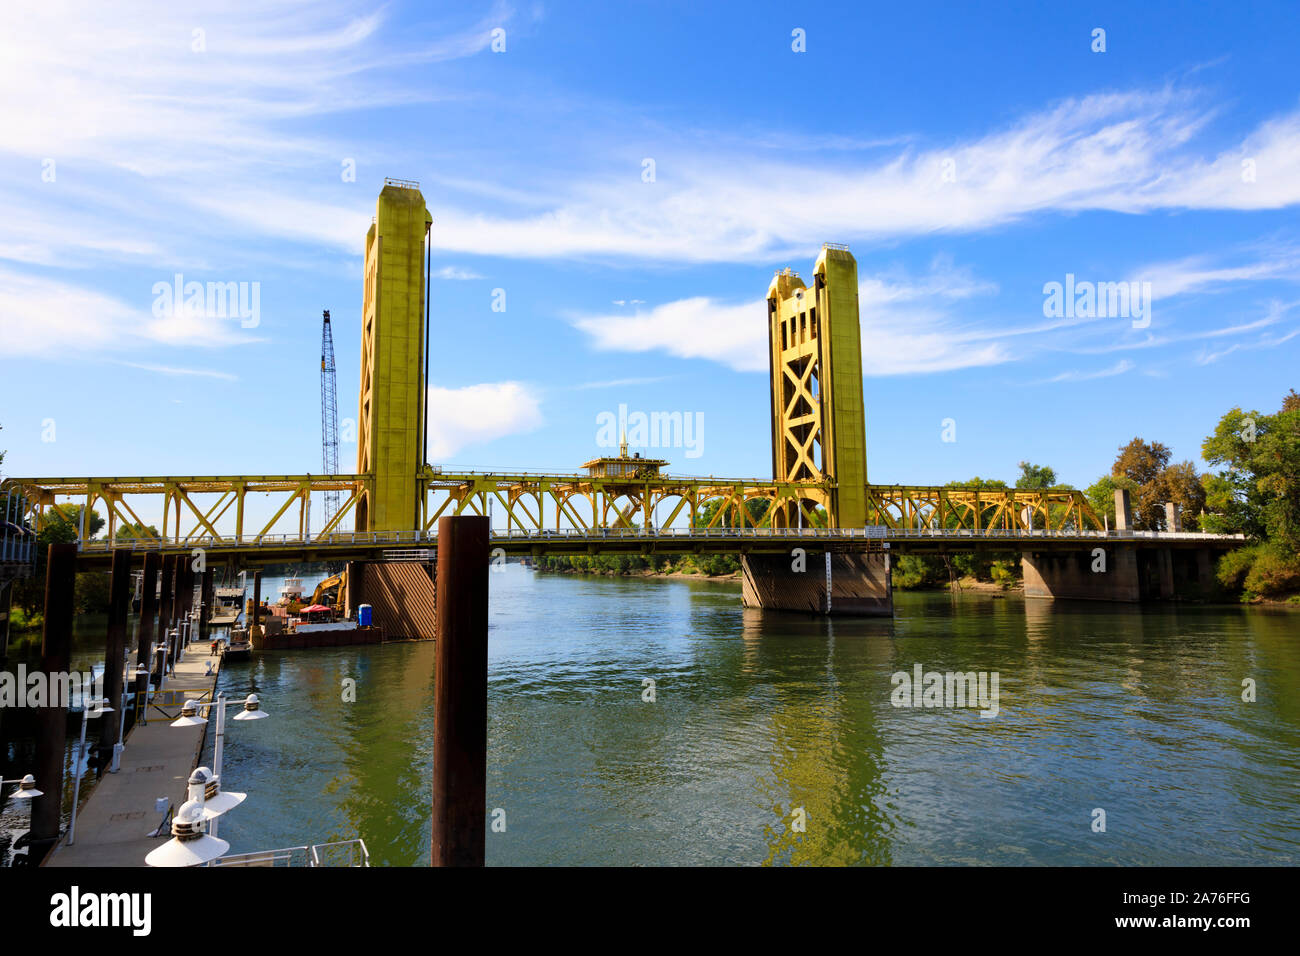 The Golden Tower Bridge spanning the Sacramento River, Sacramento, State capital of California, United States of America. Stock Photo